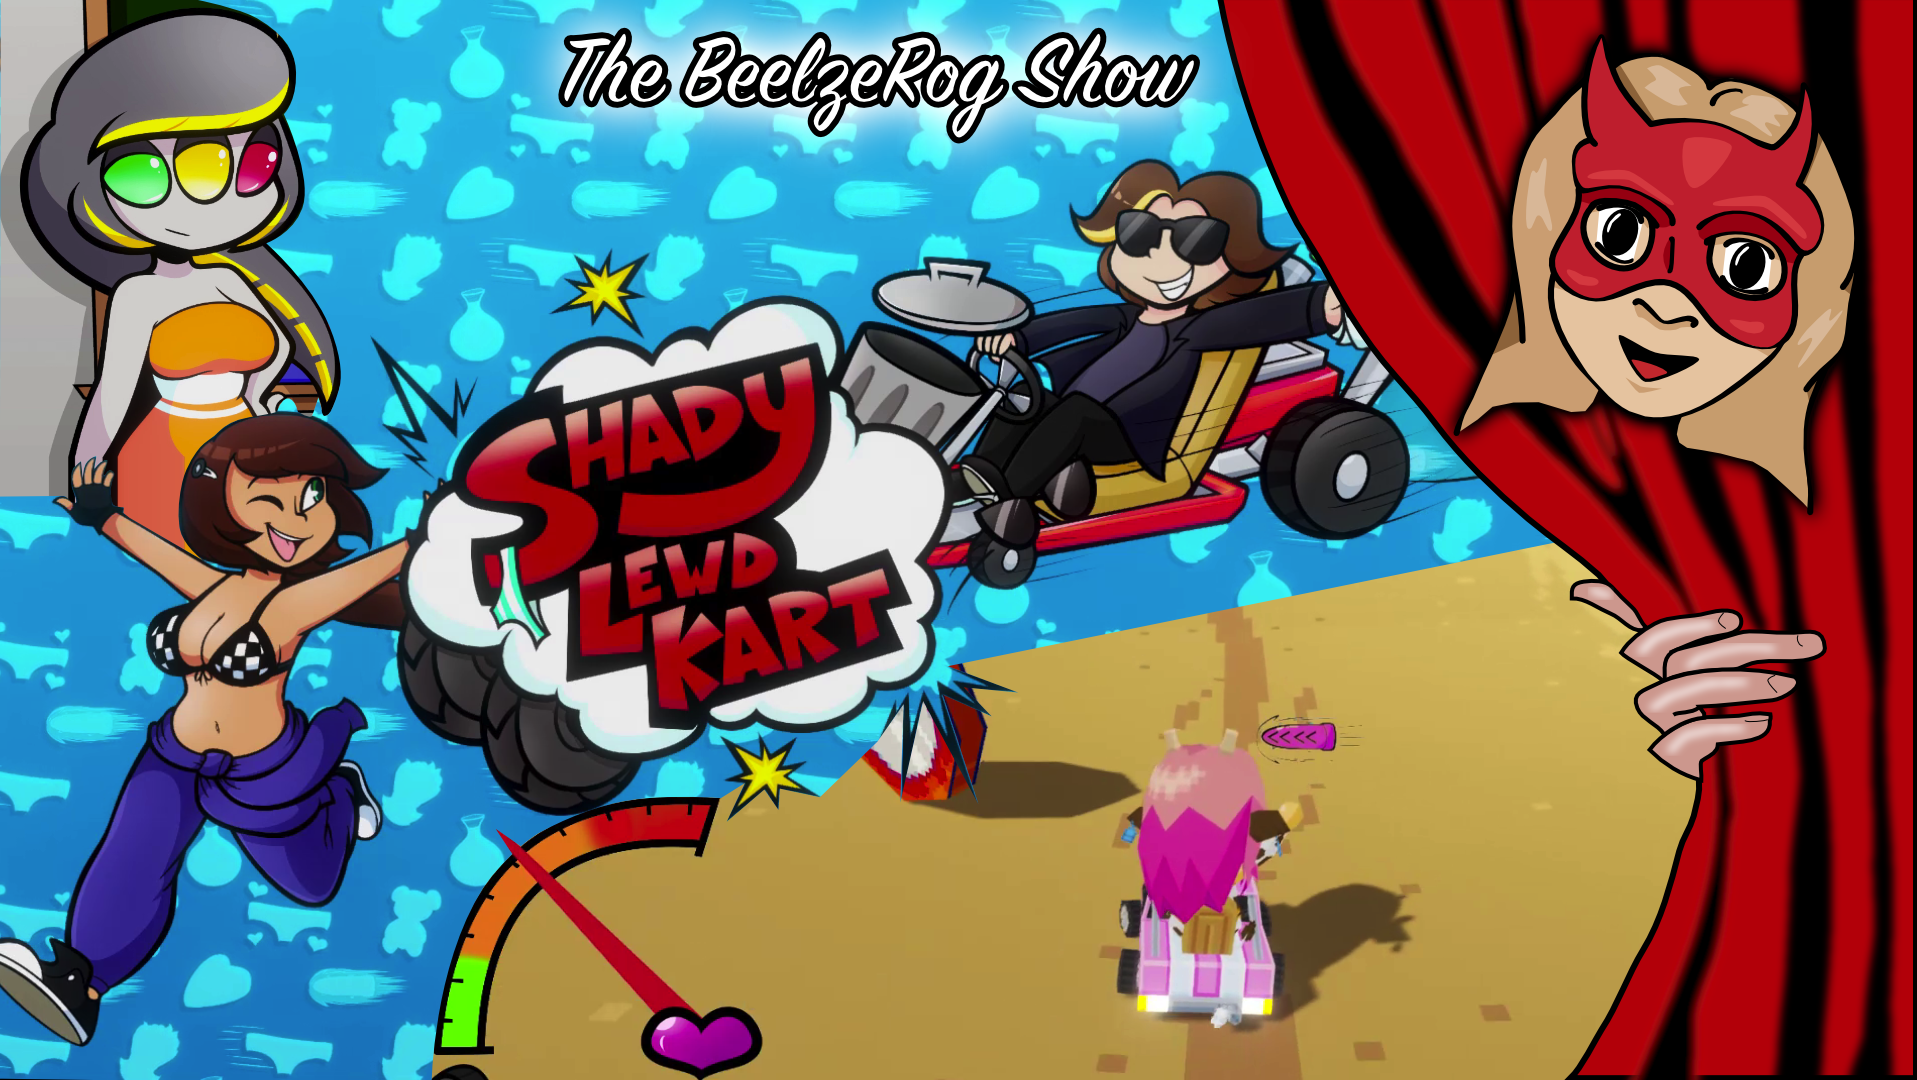 BeelzeRog Show Adult Game Review 29: Shady Lewd Kart